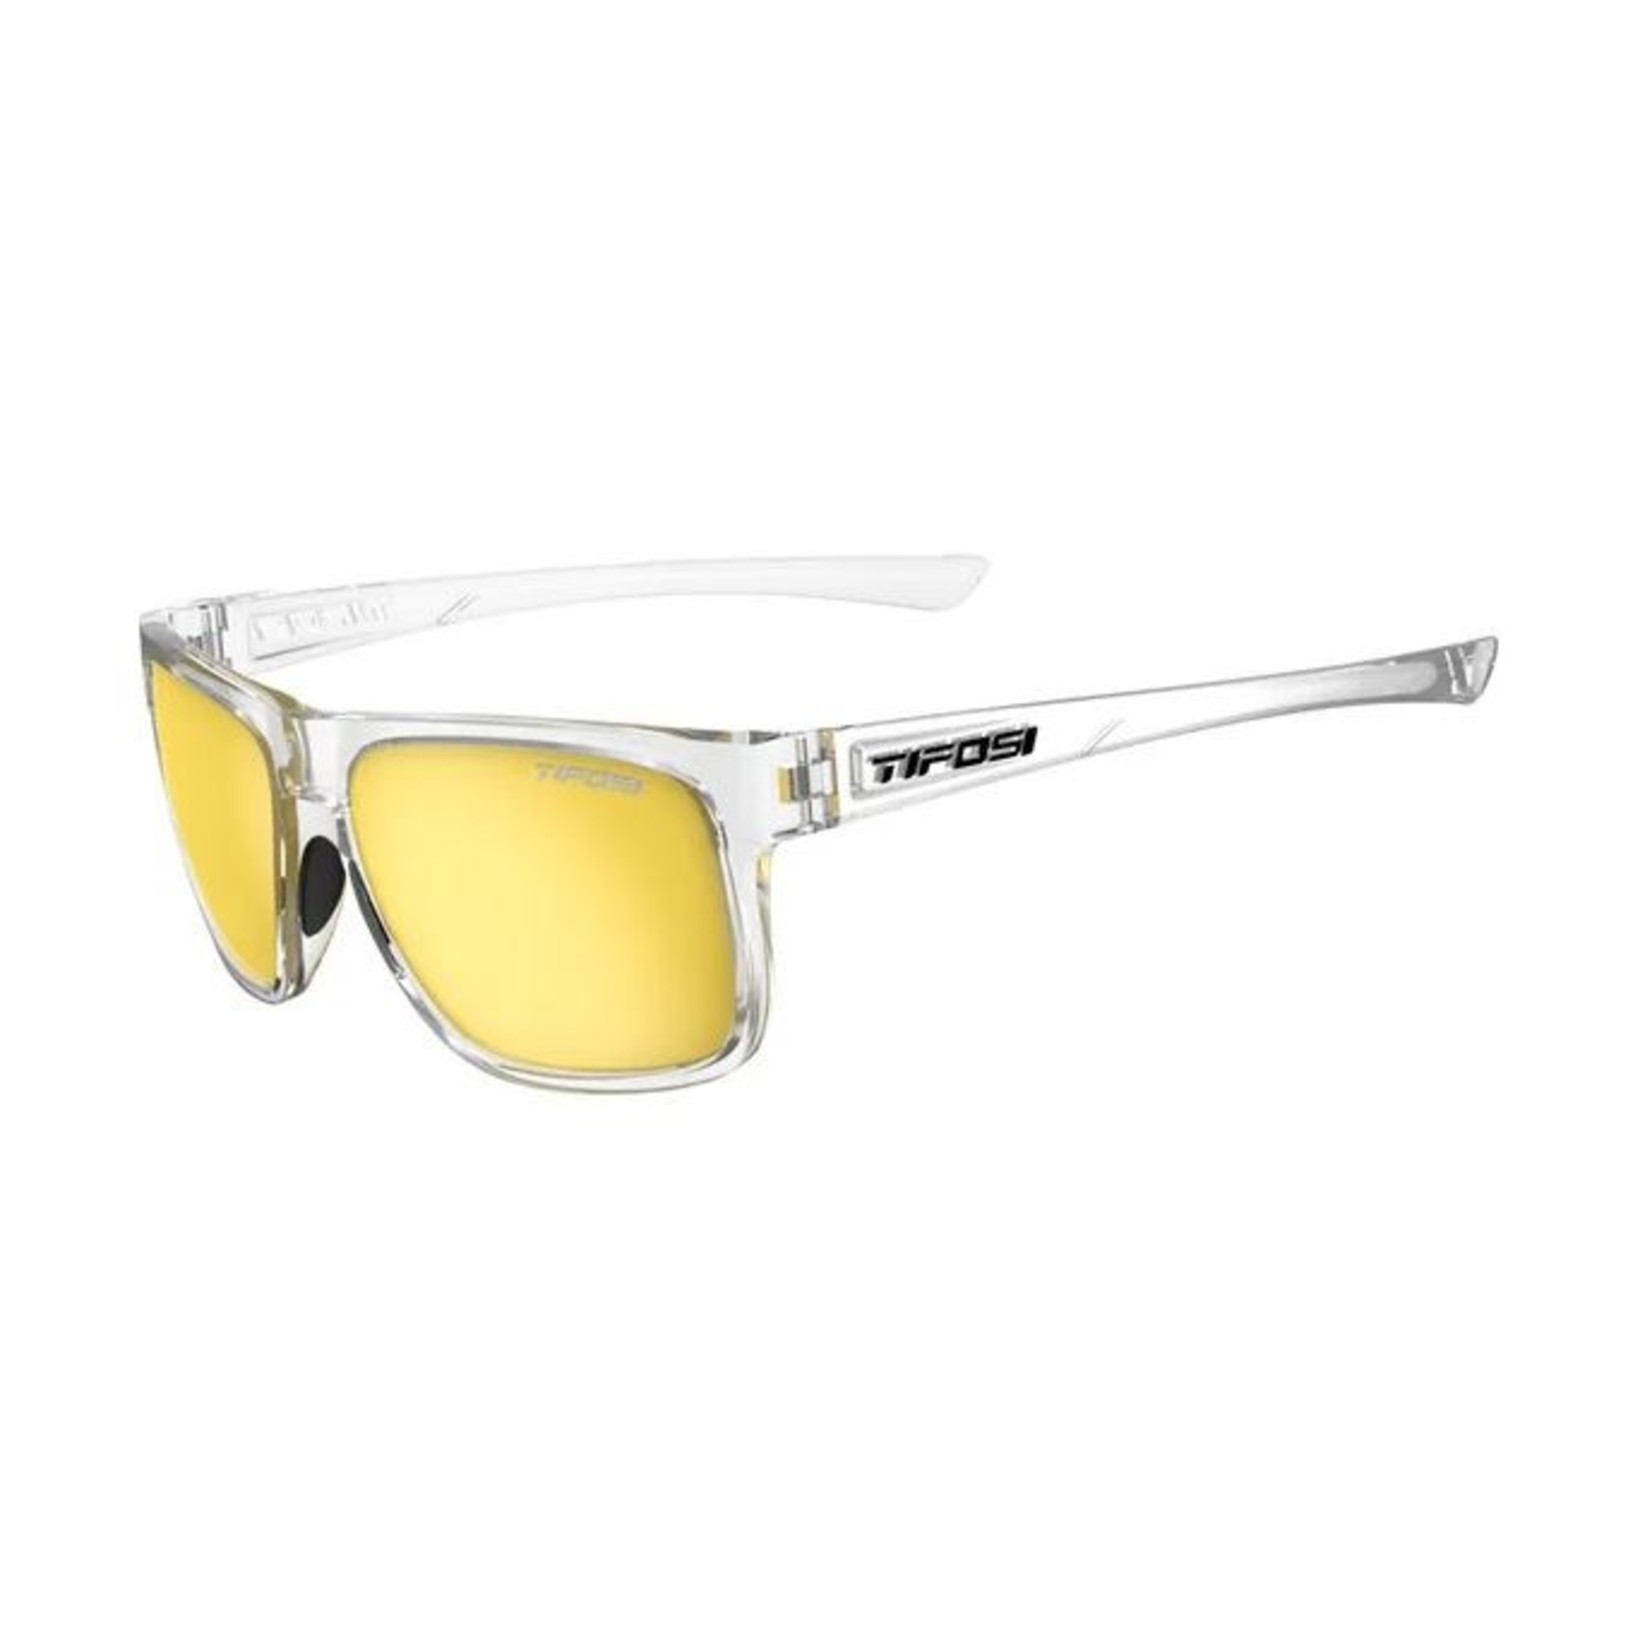 Tifosi Tifosi Cycling Sunglasses - Swick - Lifestyle Glasses - Crystal Clear